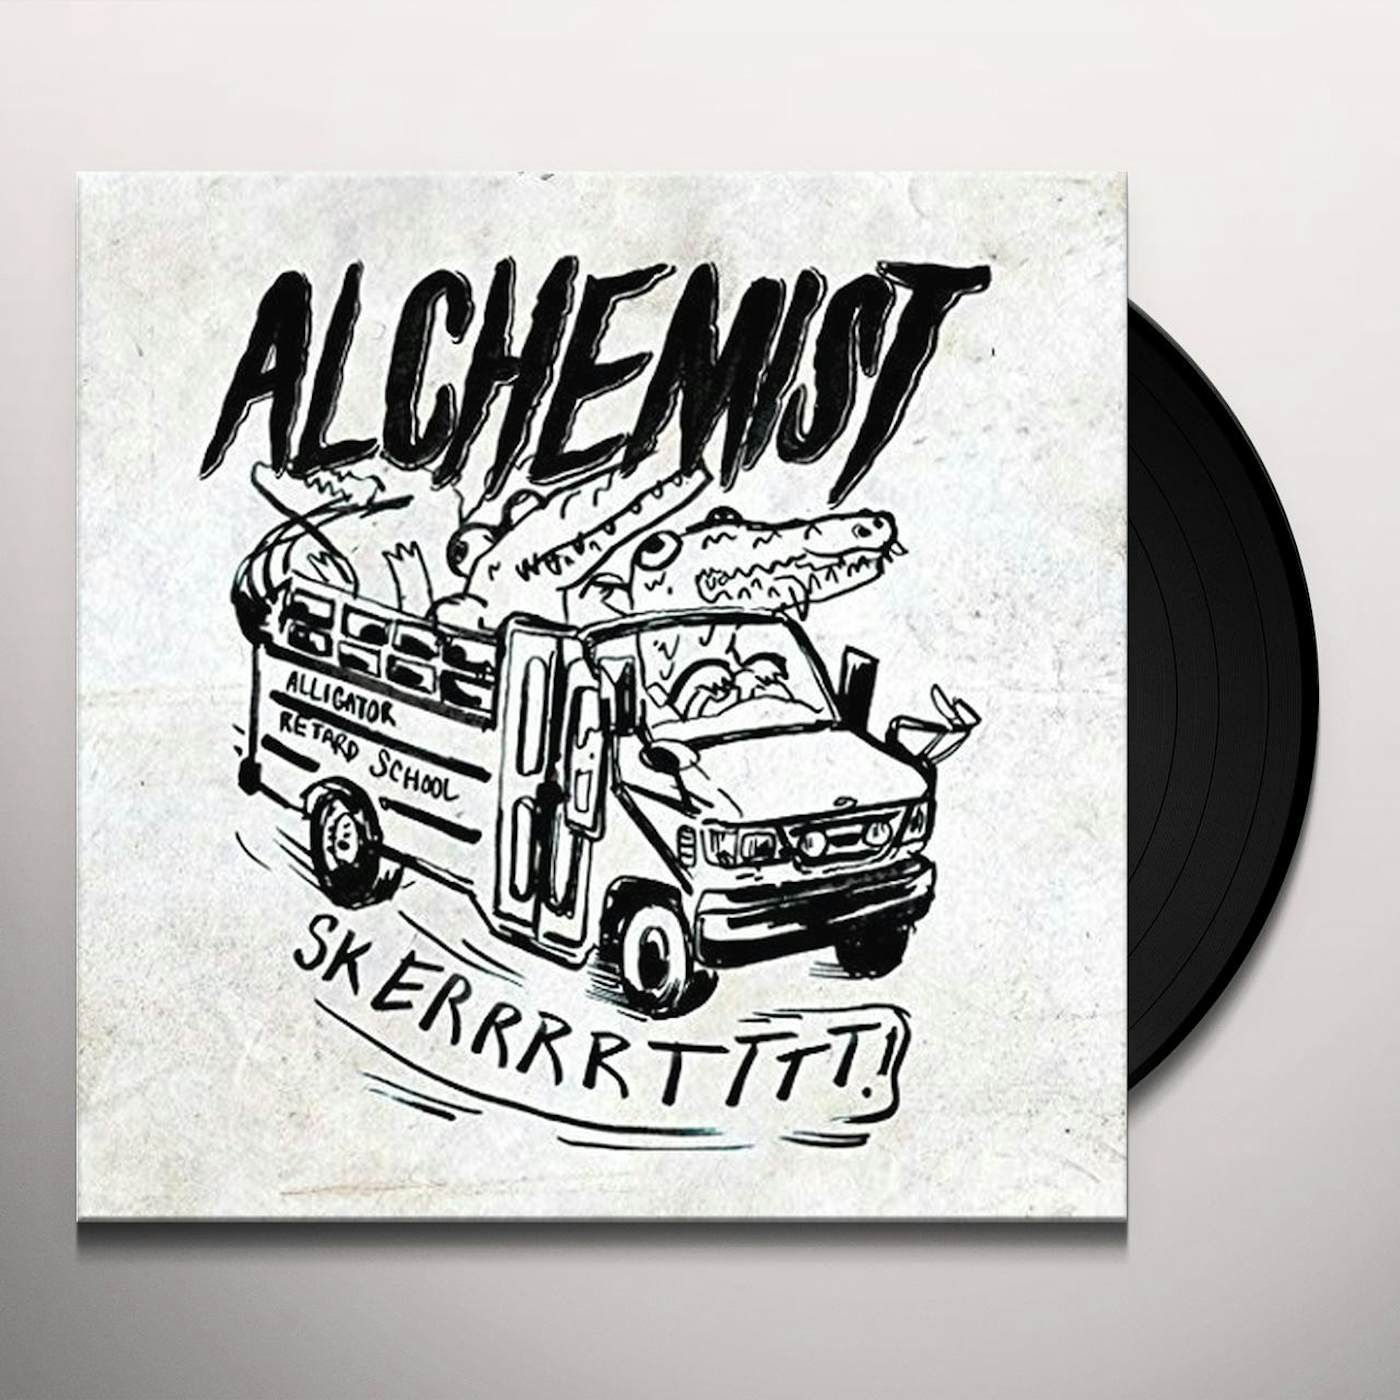 The Alchemist RETARDED ALLIGATOR BEATS Vinyl Record